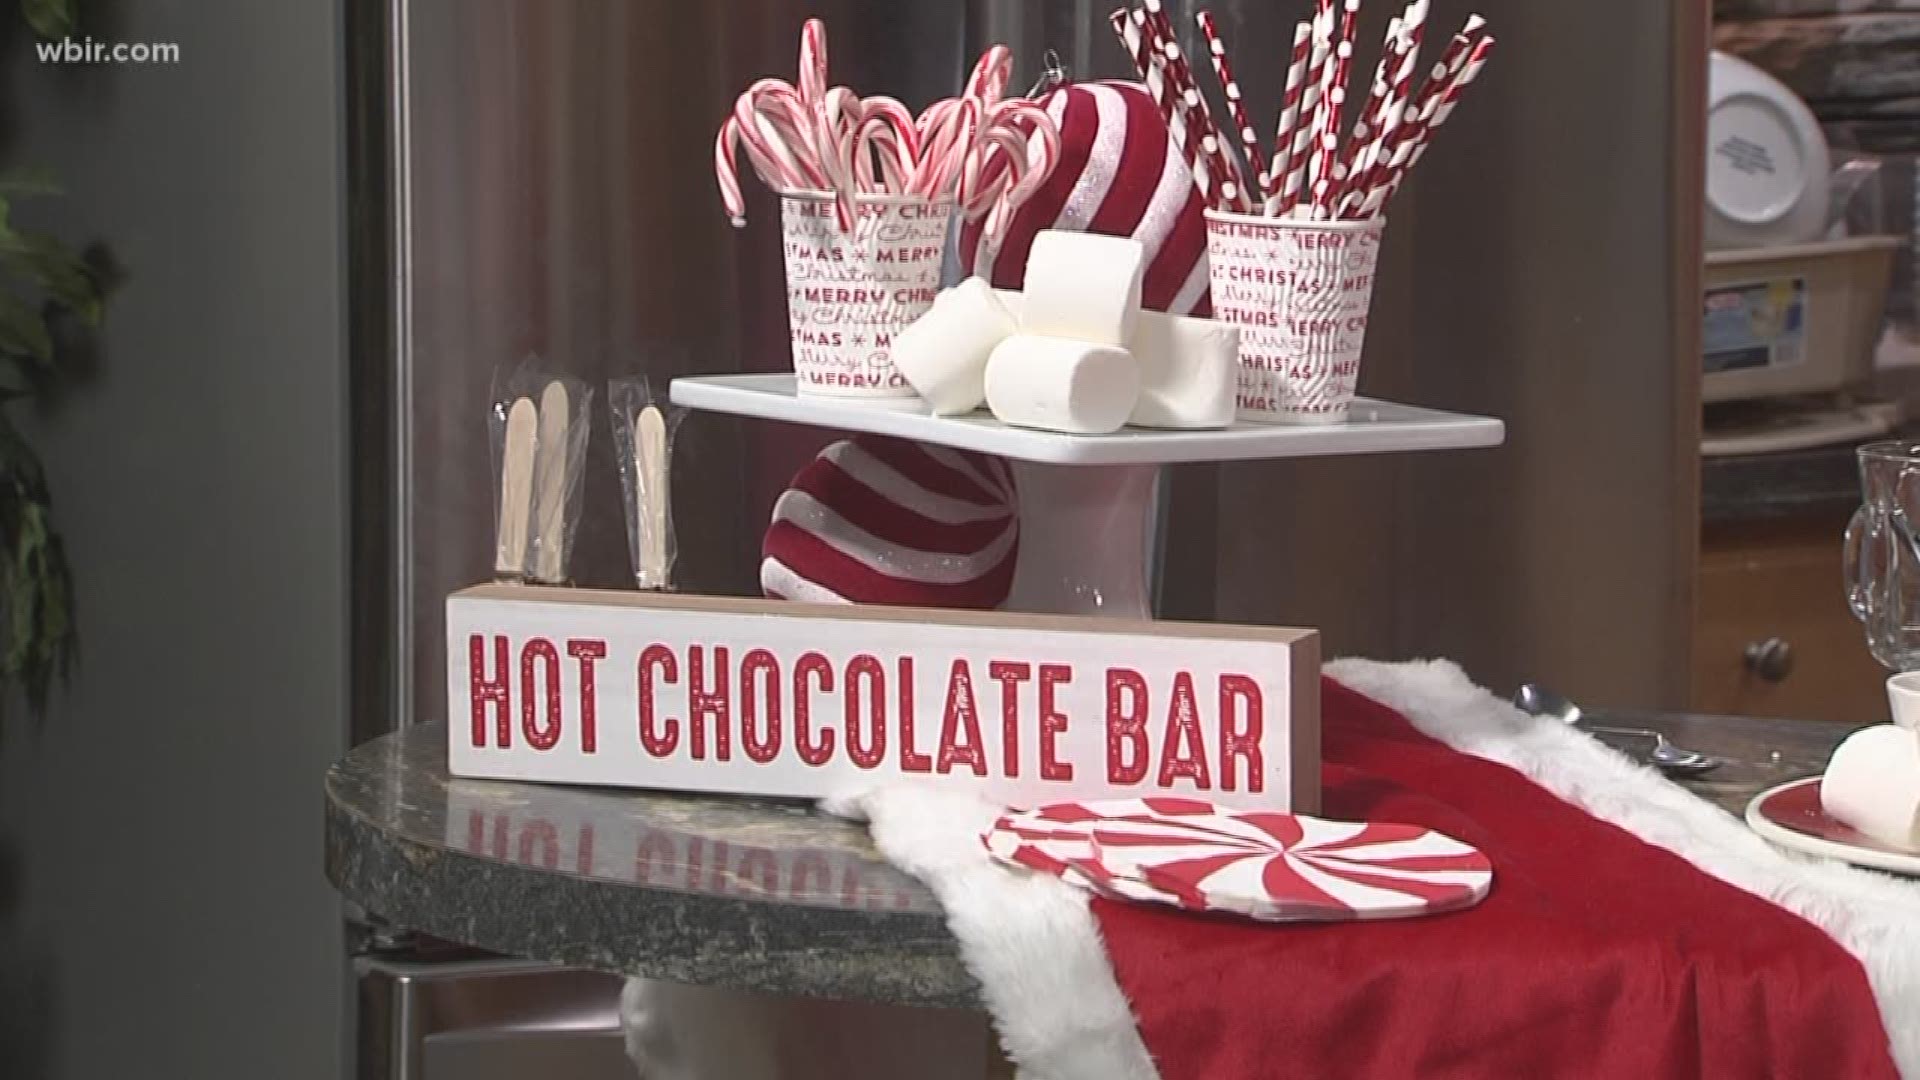 Deana Hurd with Lulu's Tea Room shares a recipe for homemade hot chocolate and a fun hot chocolate bar idea. Dec. 13, 2018-4pm